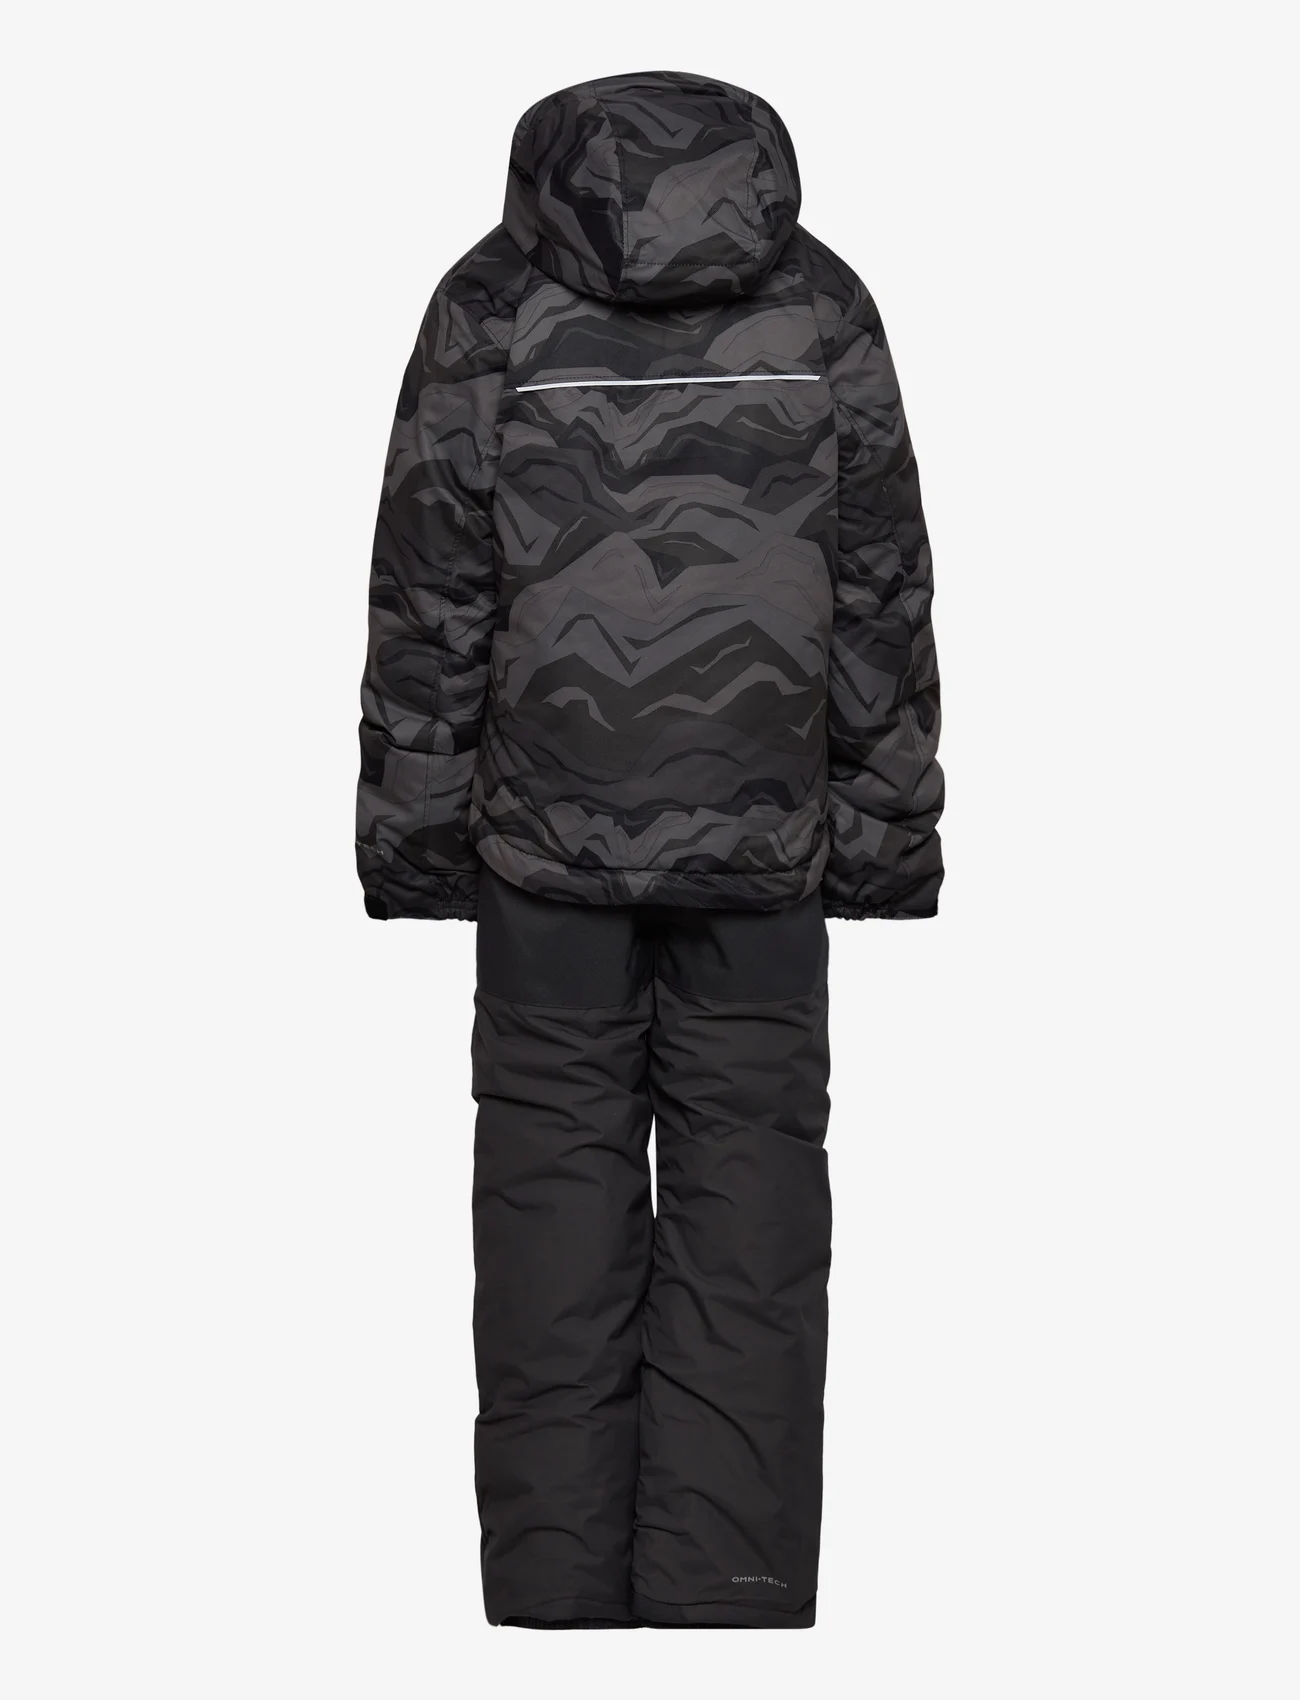 Columbia Sportswear - Buga Set - snowsuit - black tectonic - 1